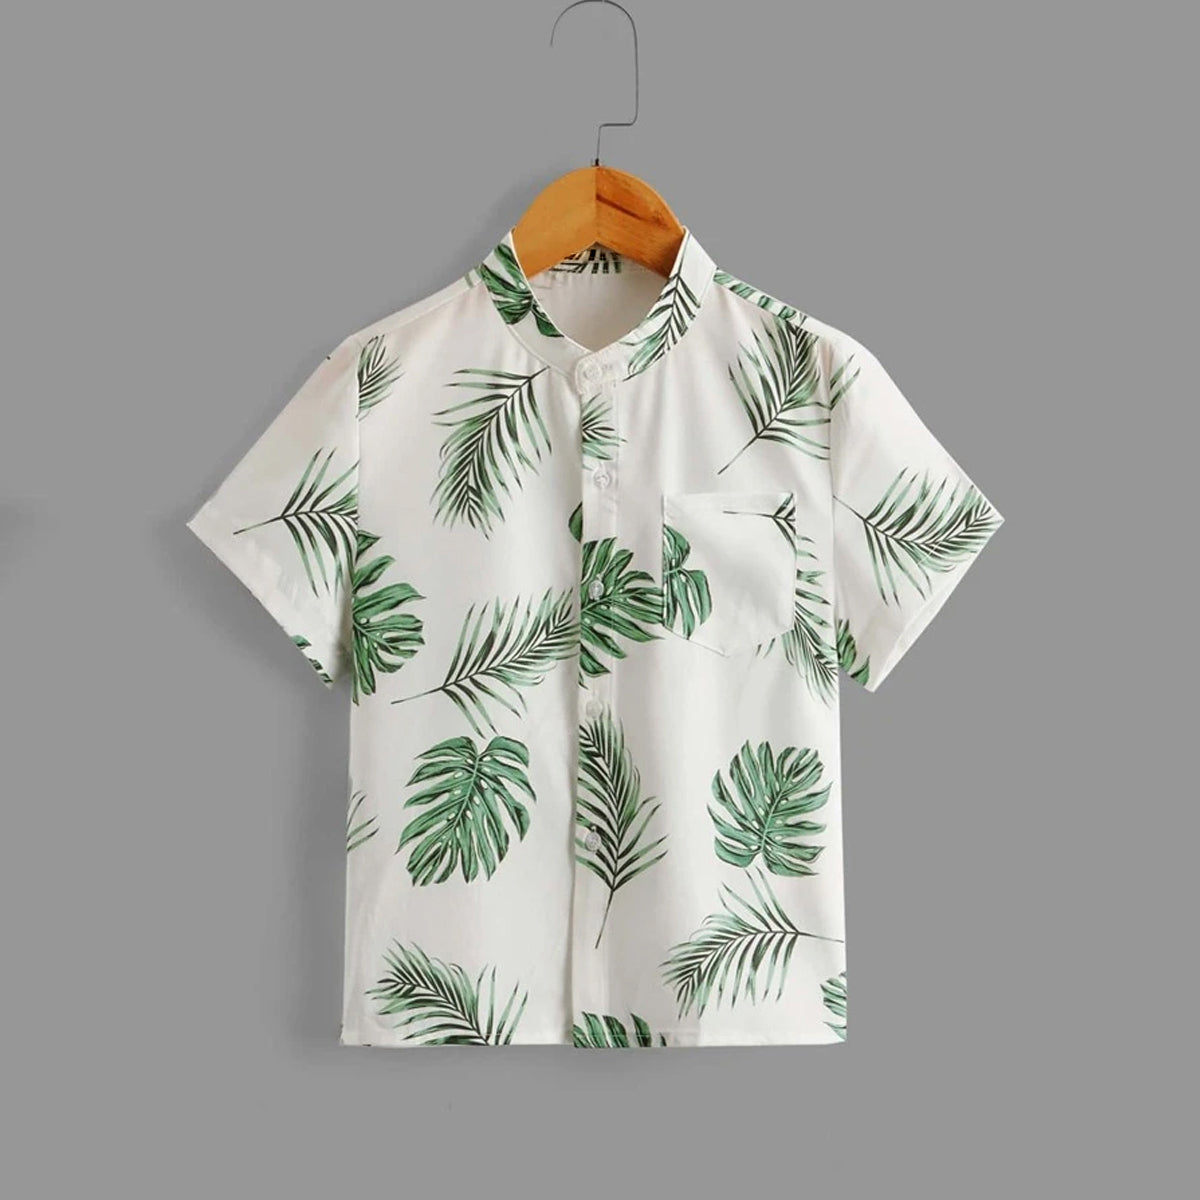 Venutaloza Green Floral Print Button Front Shirt For Boy.